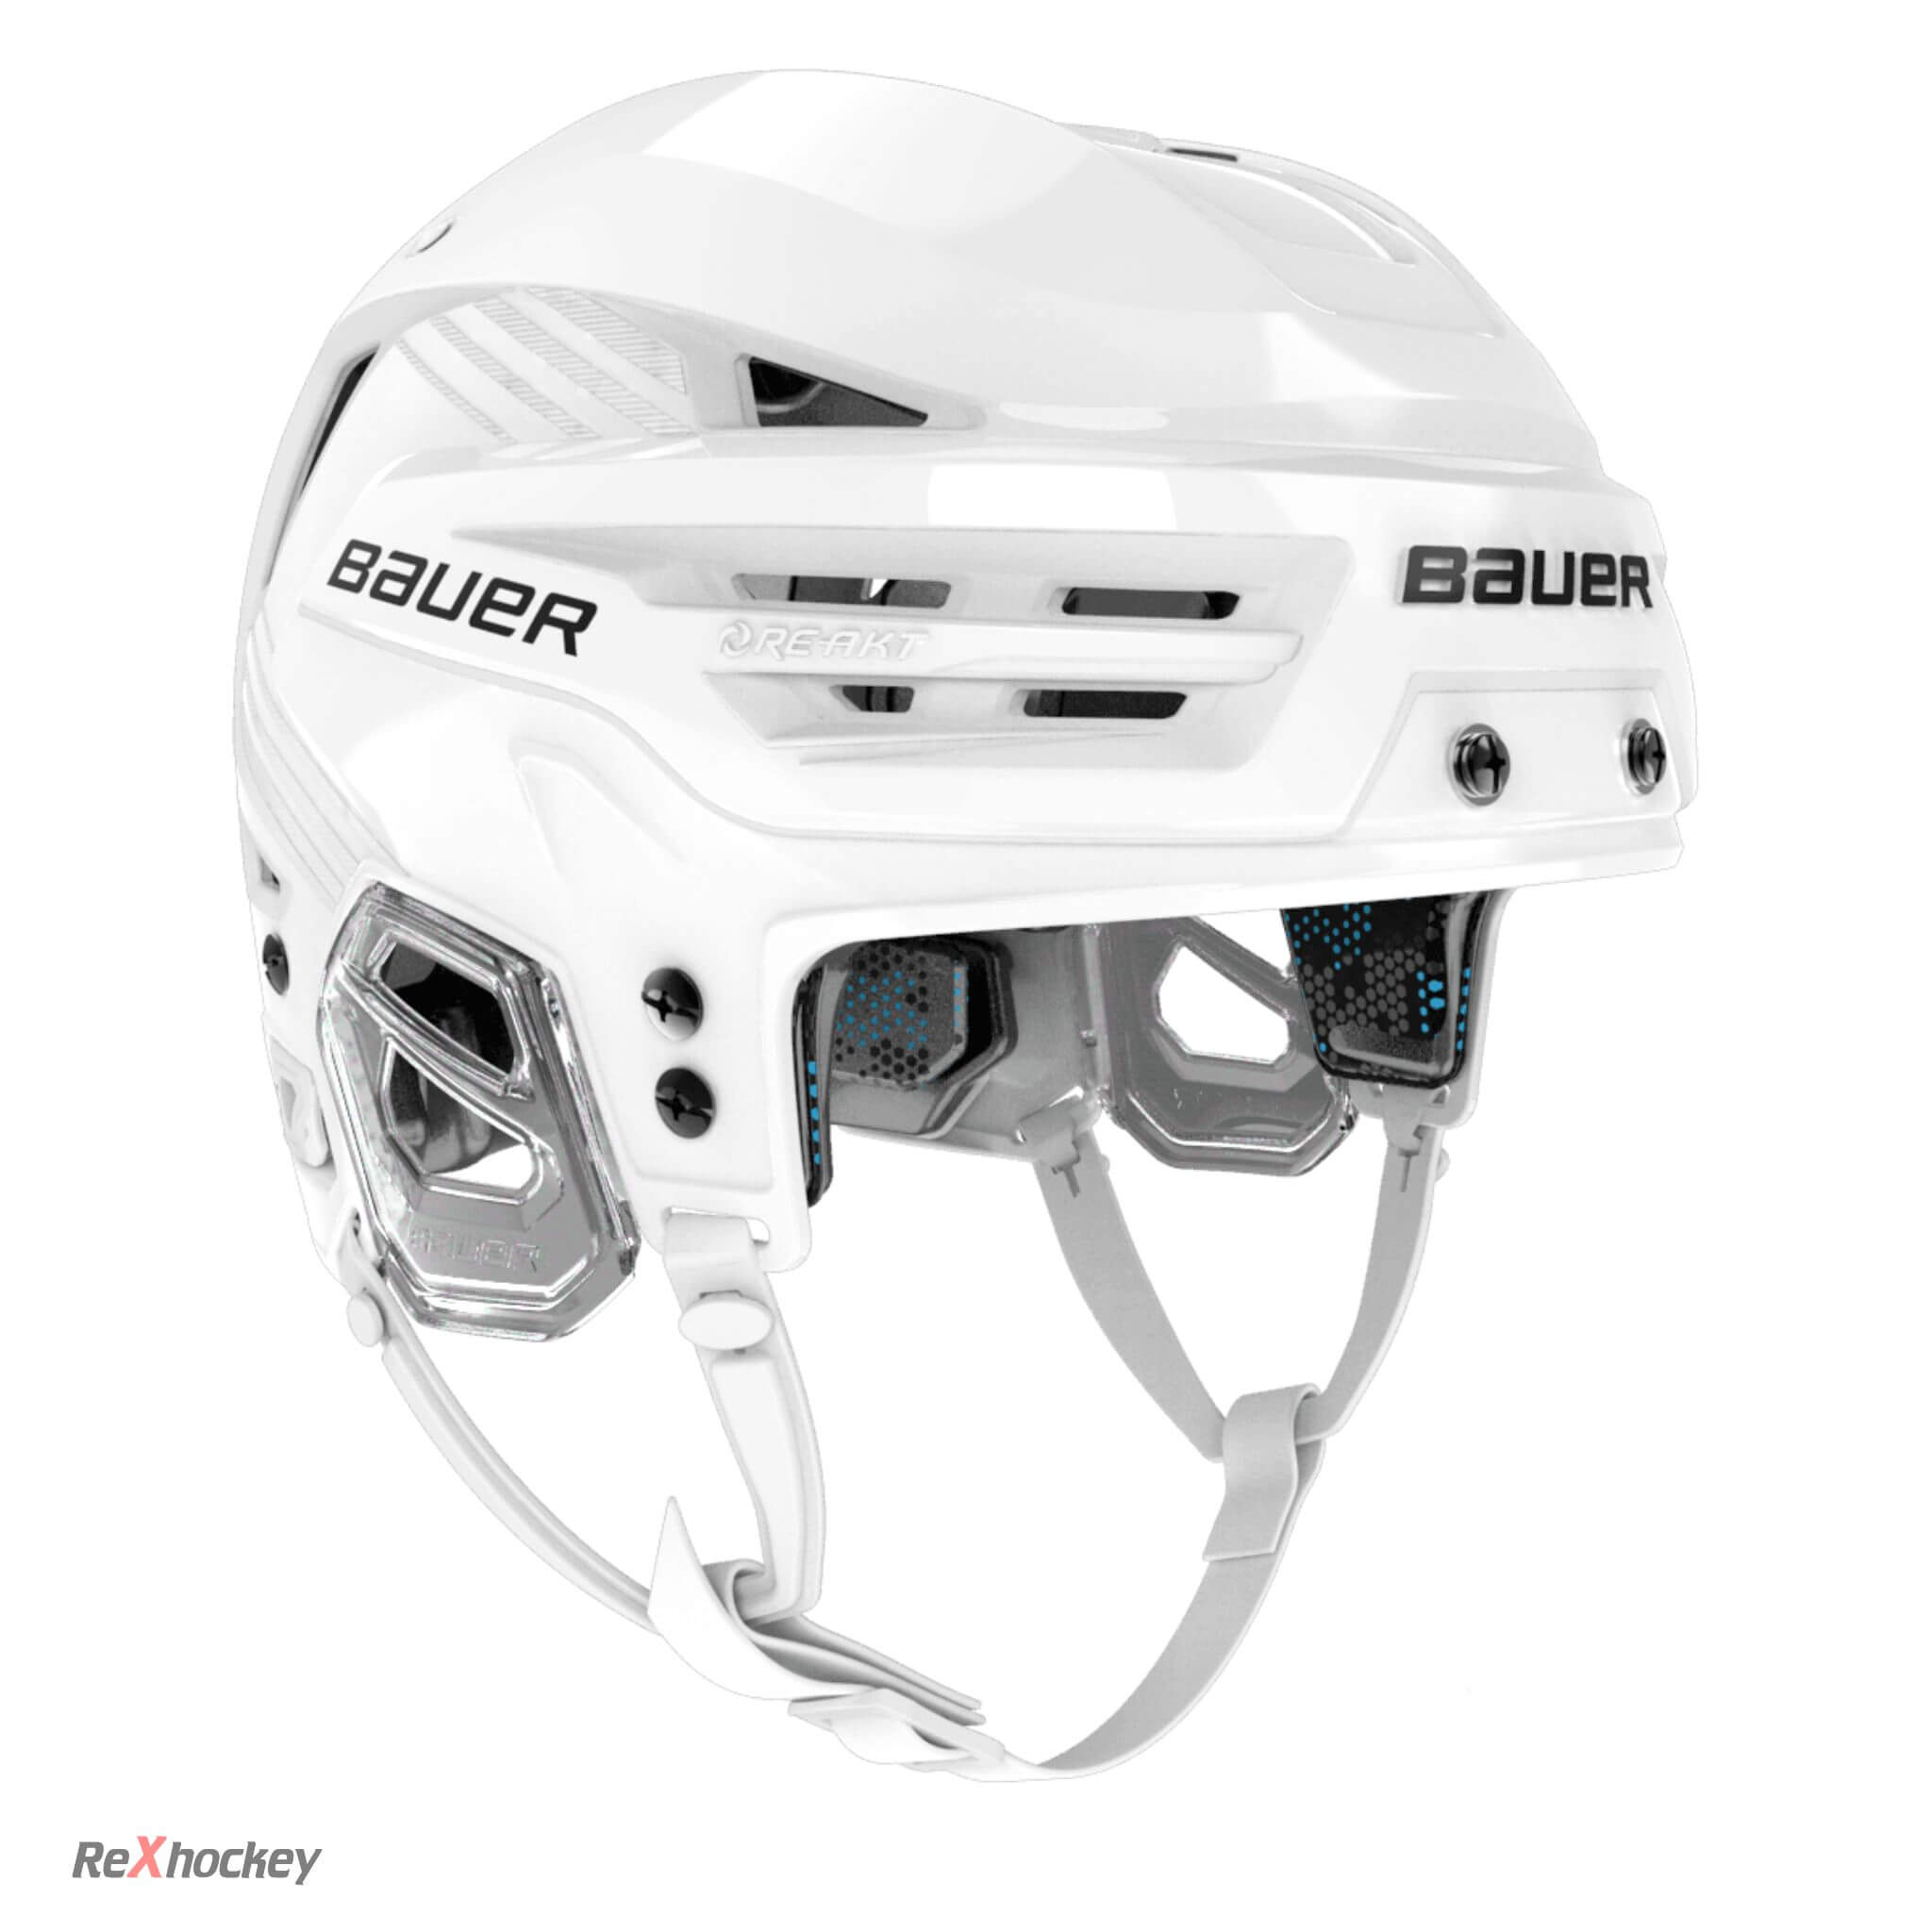 Bauer Re-Akt 200 Senior Hockey Helmet